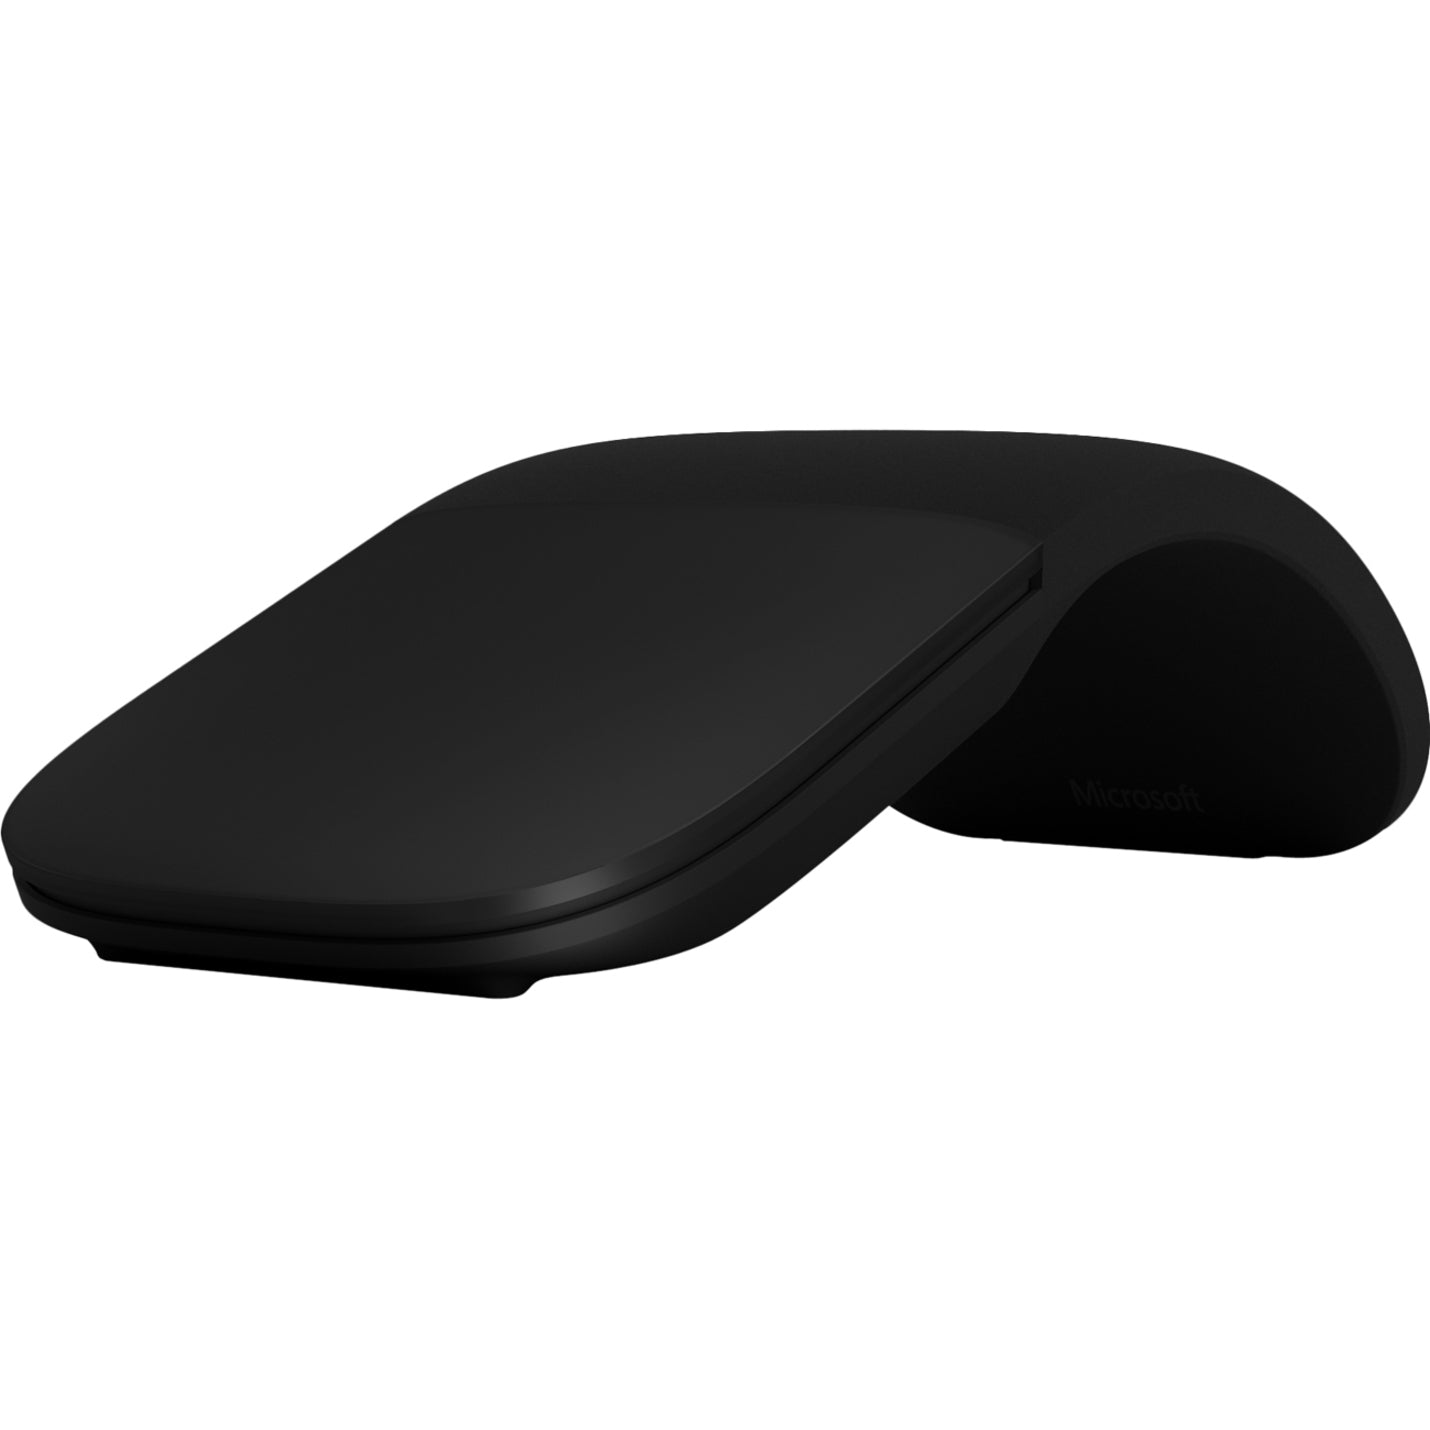 Microsoft ELG-00001 Arc Mouse, Wireless Bluetooth Black